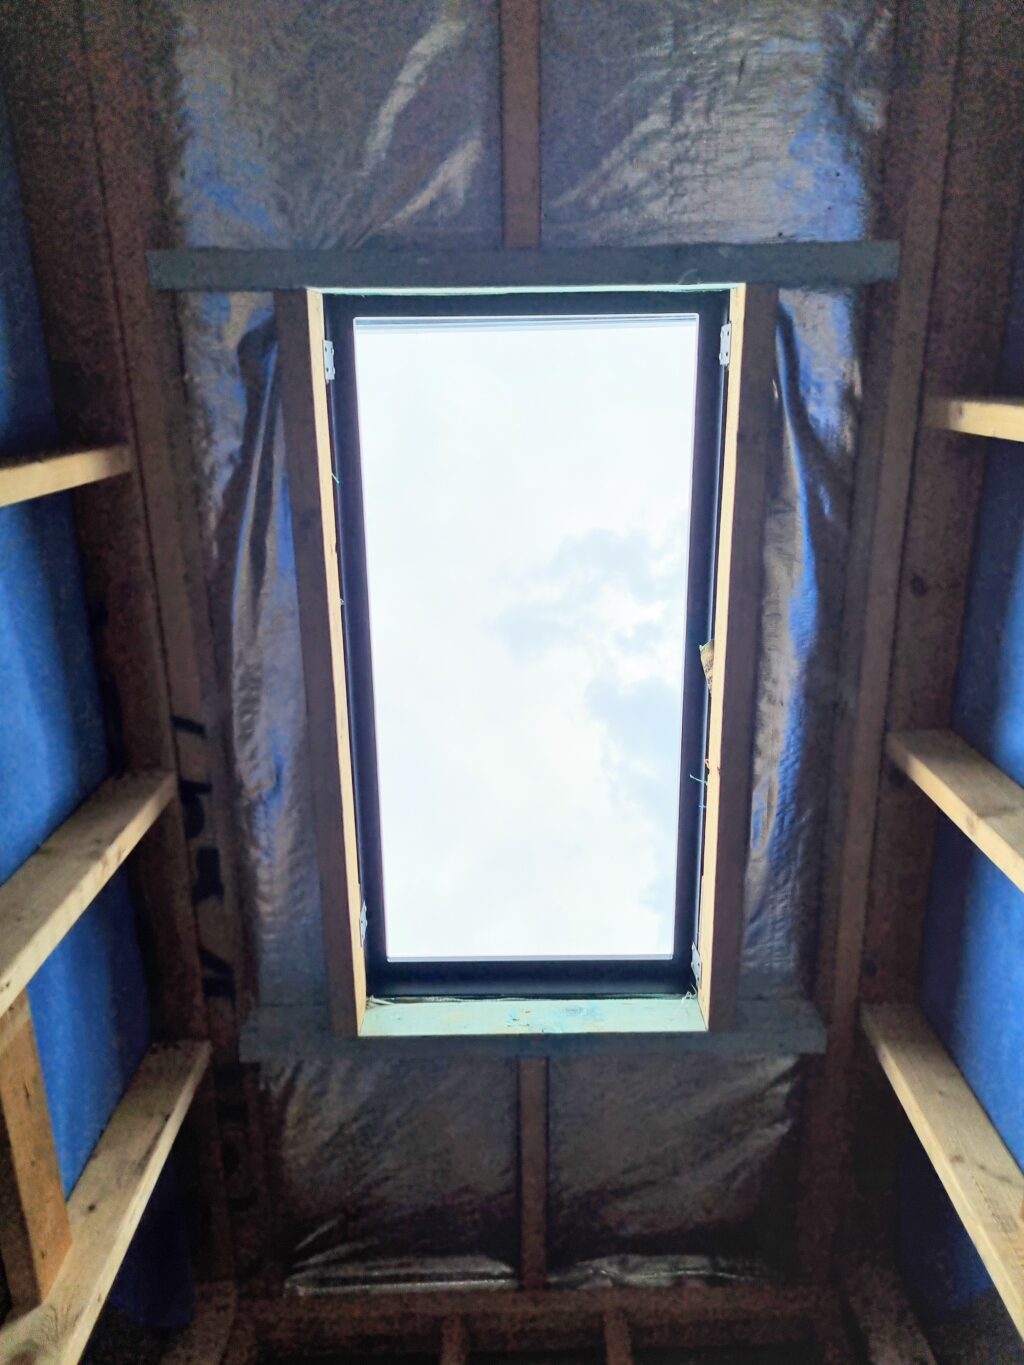 Skylight shaft framing